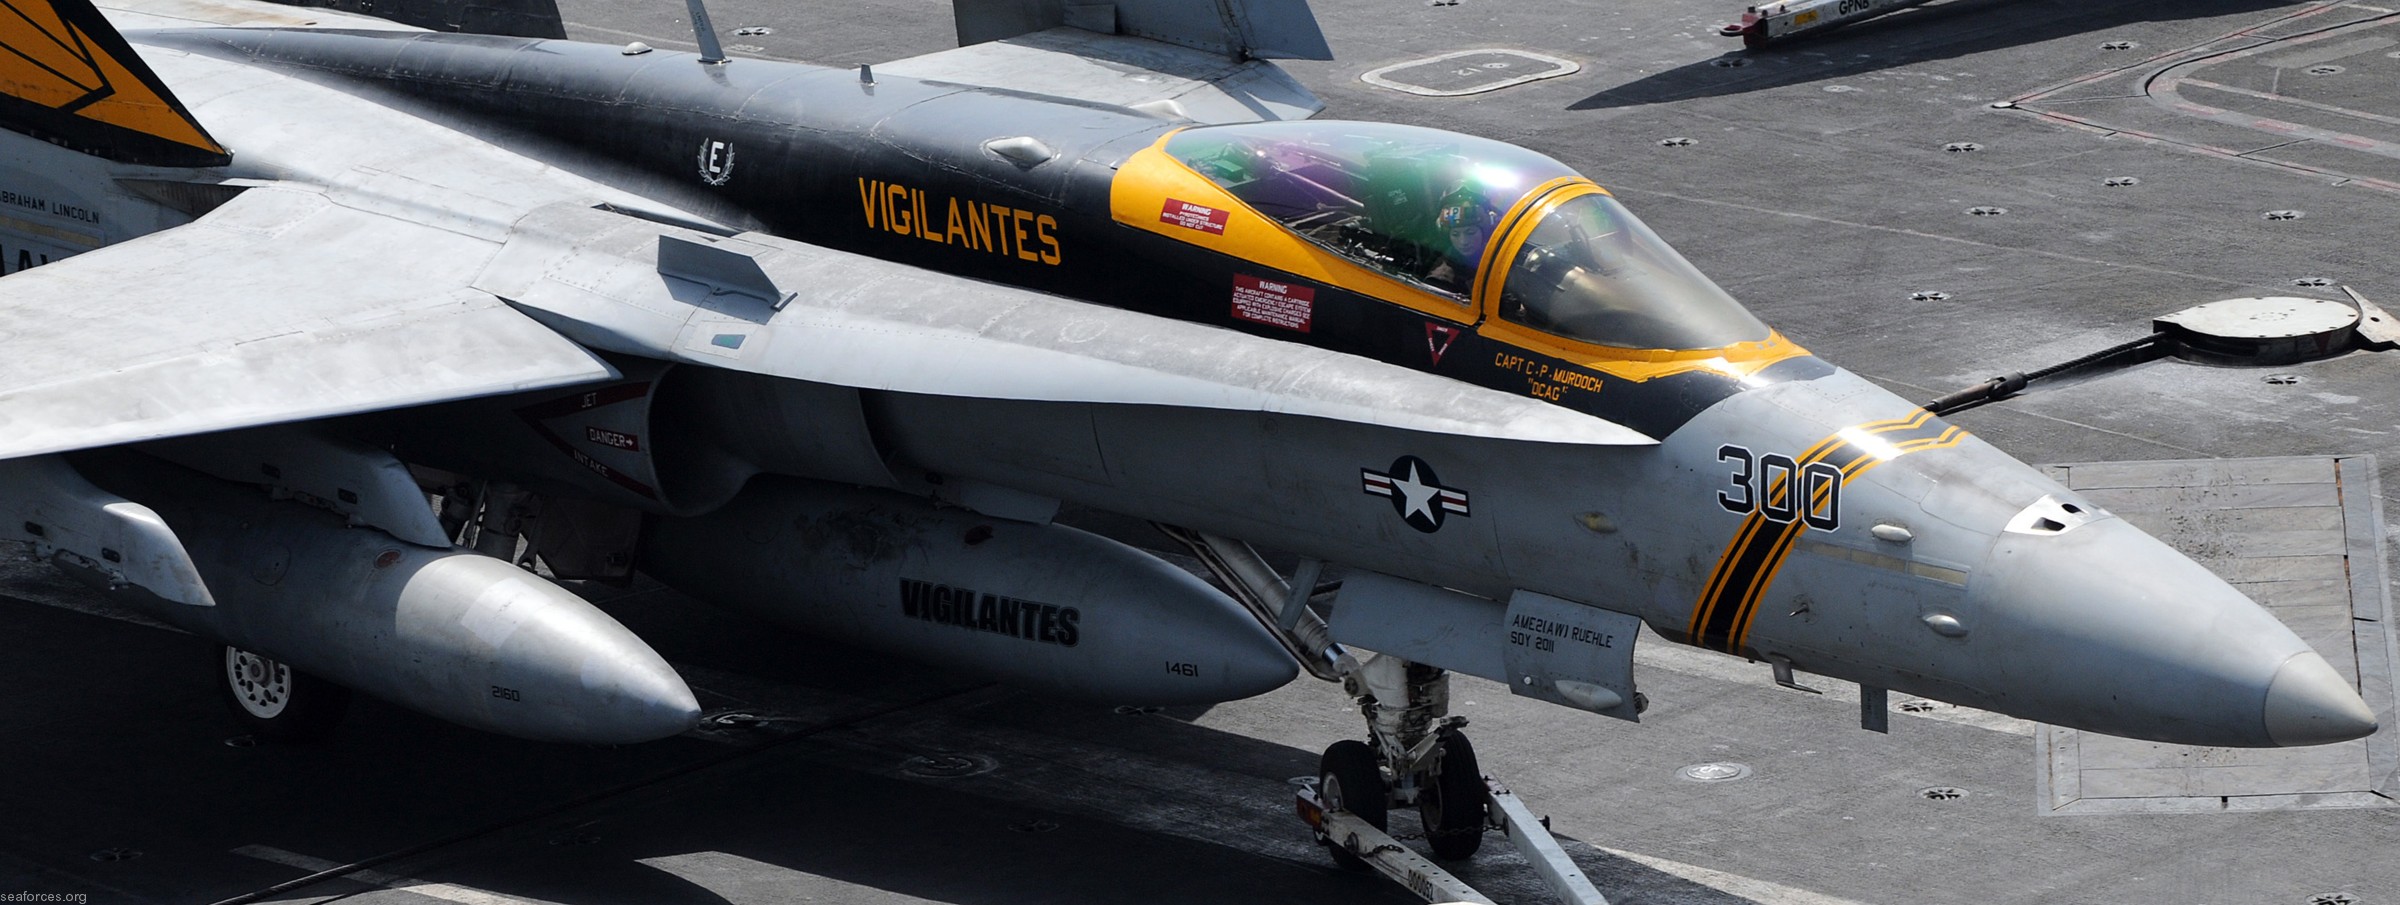 vfa-151 vigilantes strike fighter squadron navy f/a-18c hornet carrier air wing cvw-2 uss abraham lincoln cvn-72 35